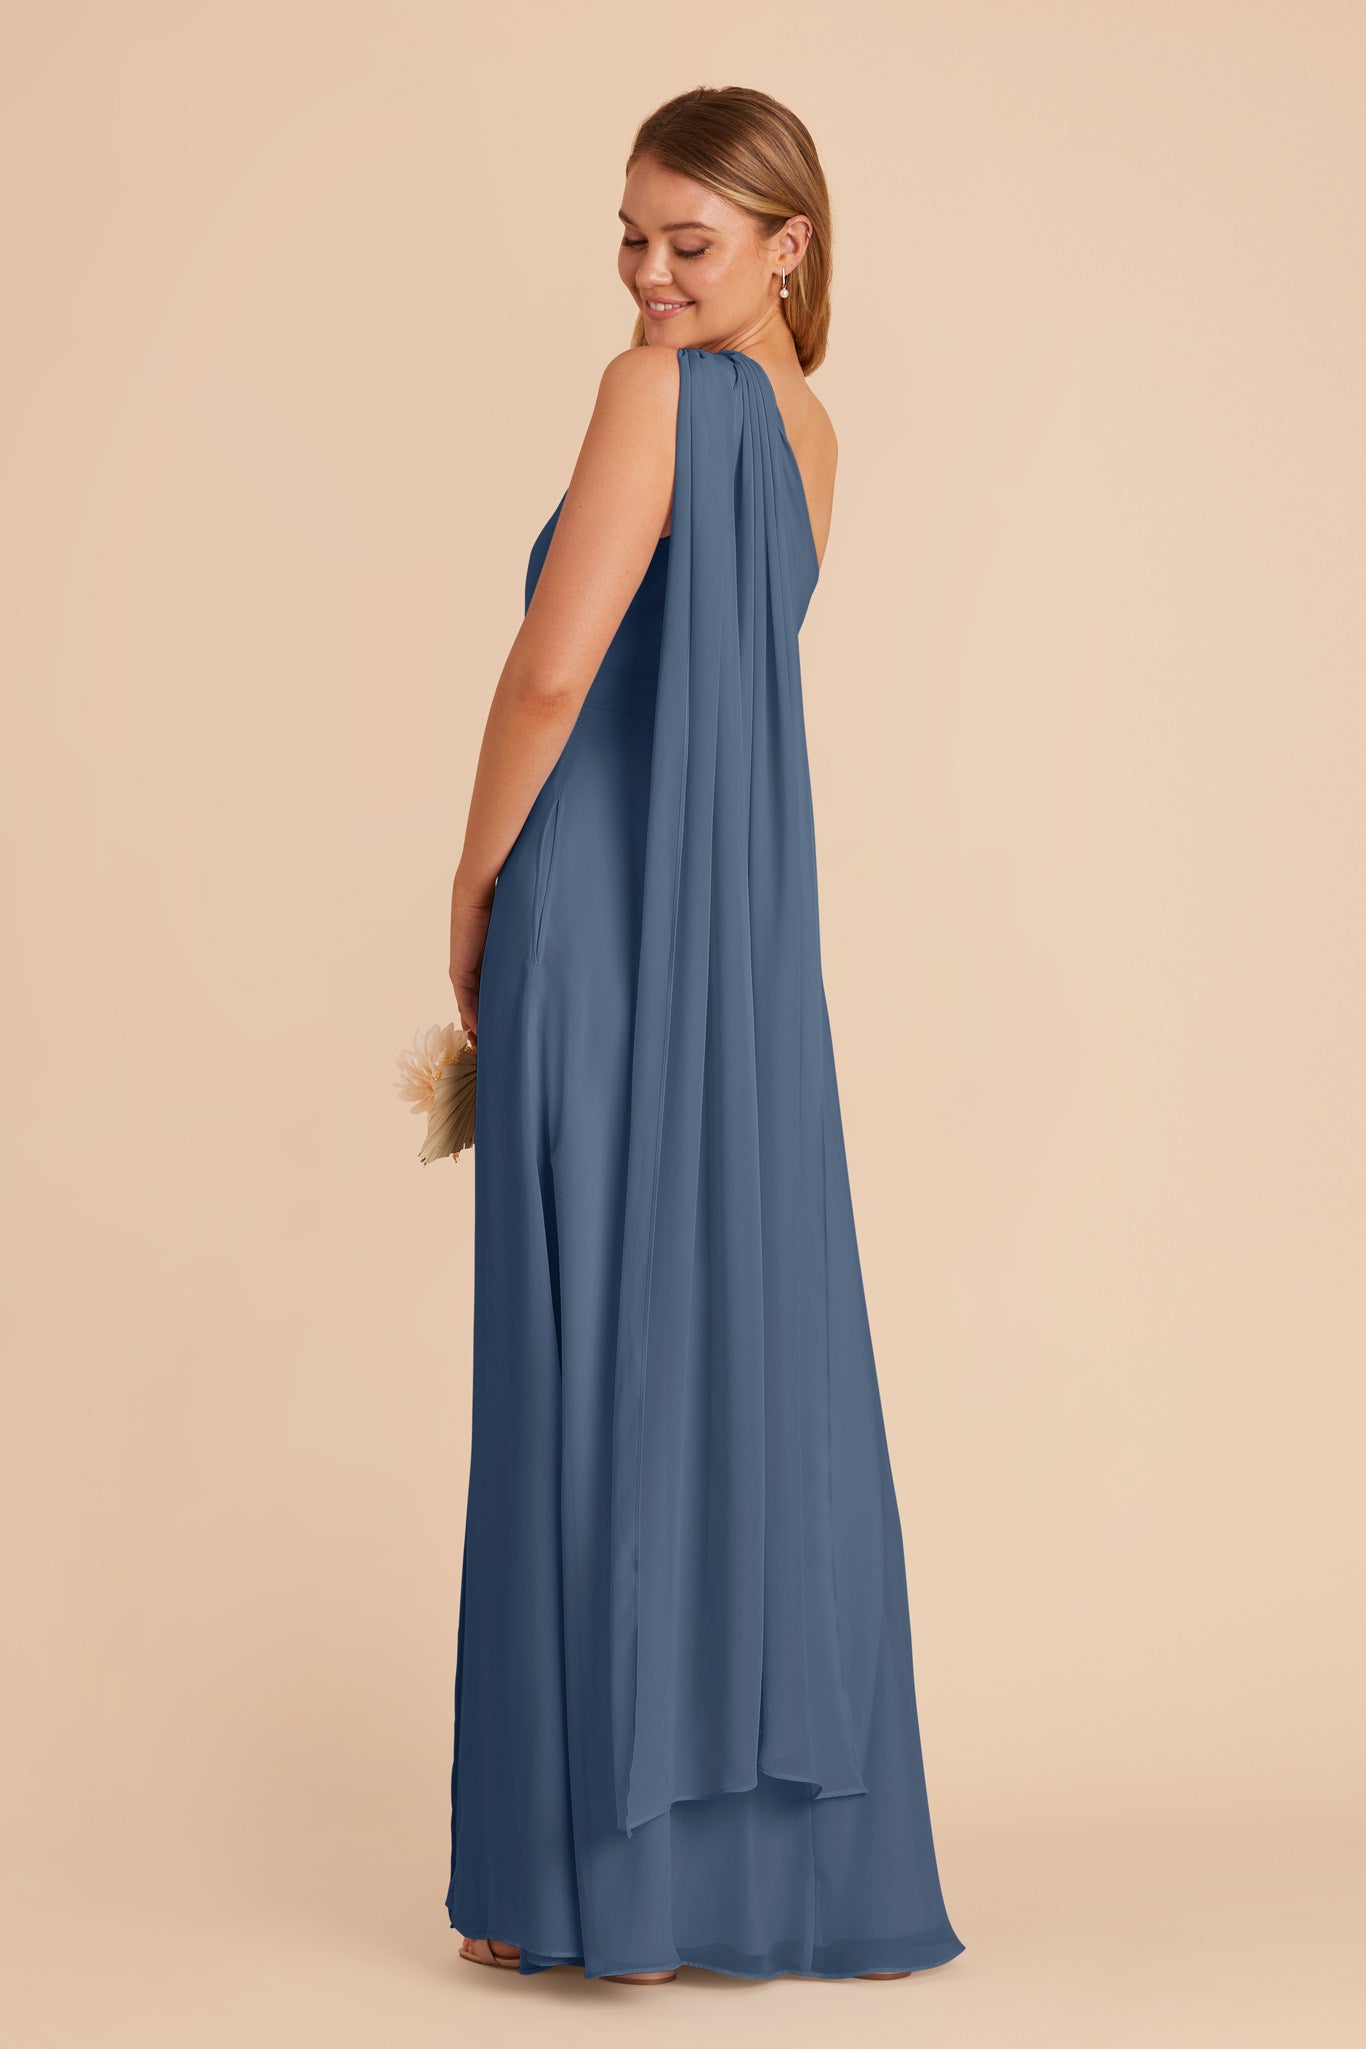 Twilight Melissa Chiffon Dress by Birdy Grey